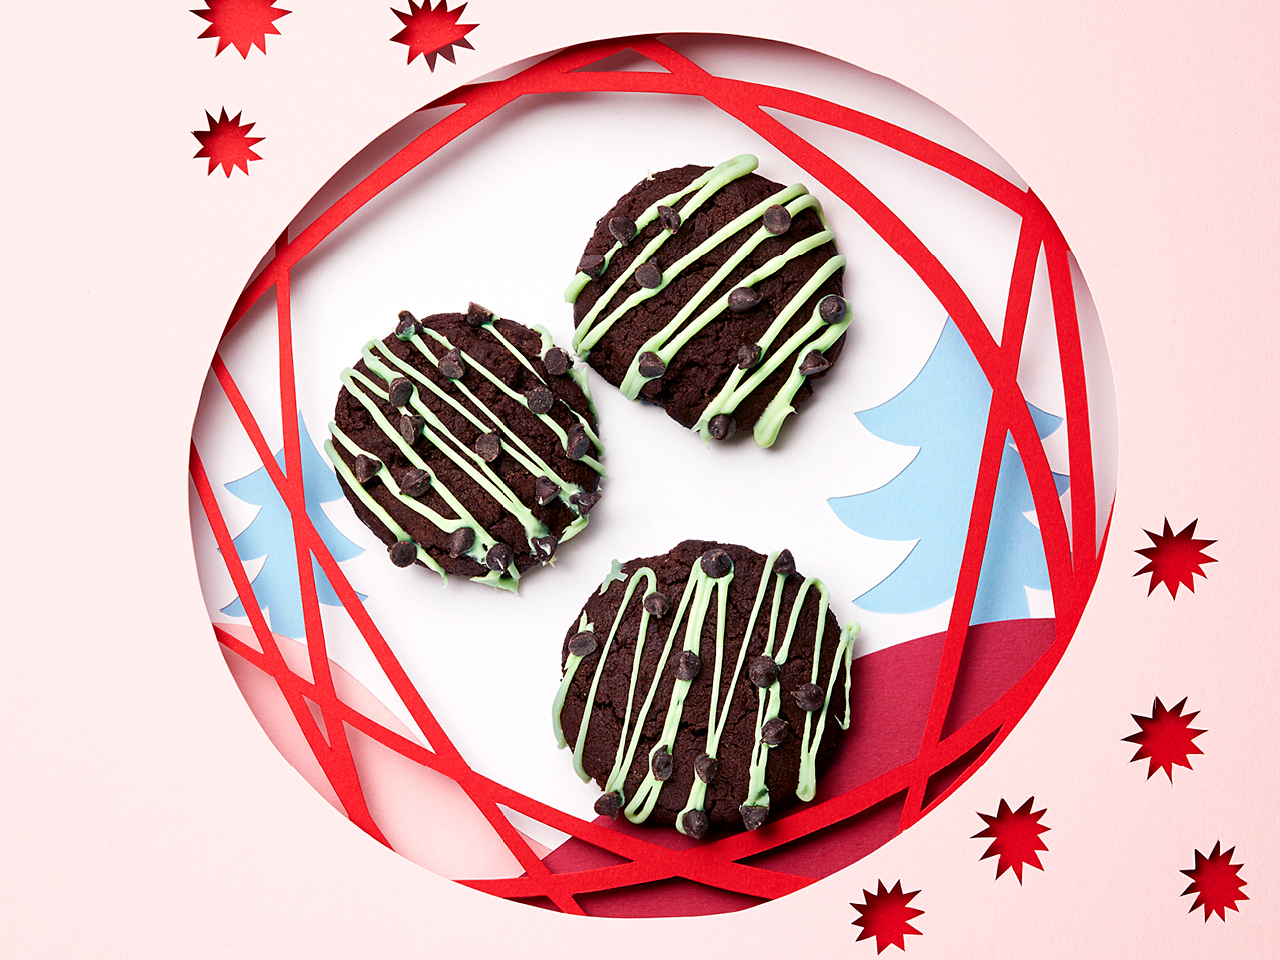 Crave Cupcakes’ Mint Chip Cookies